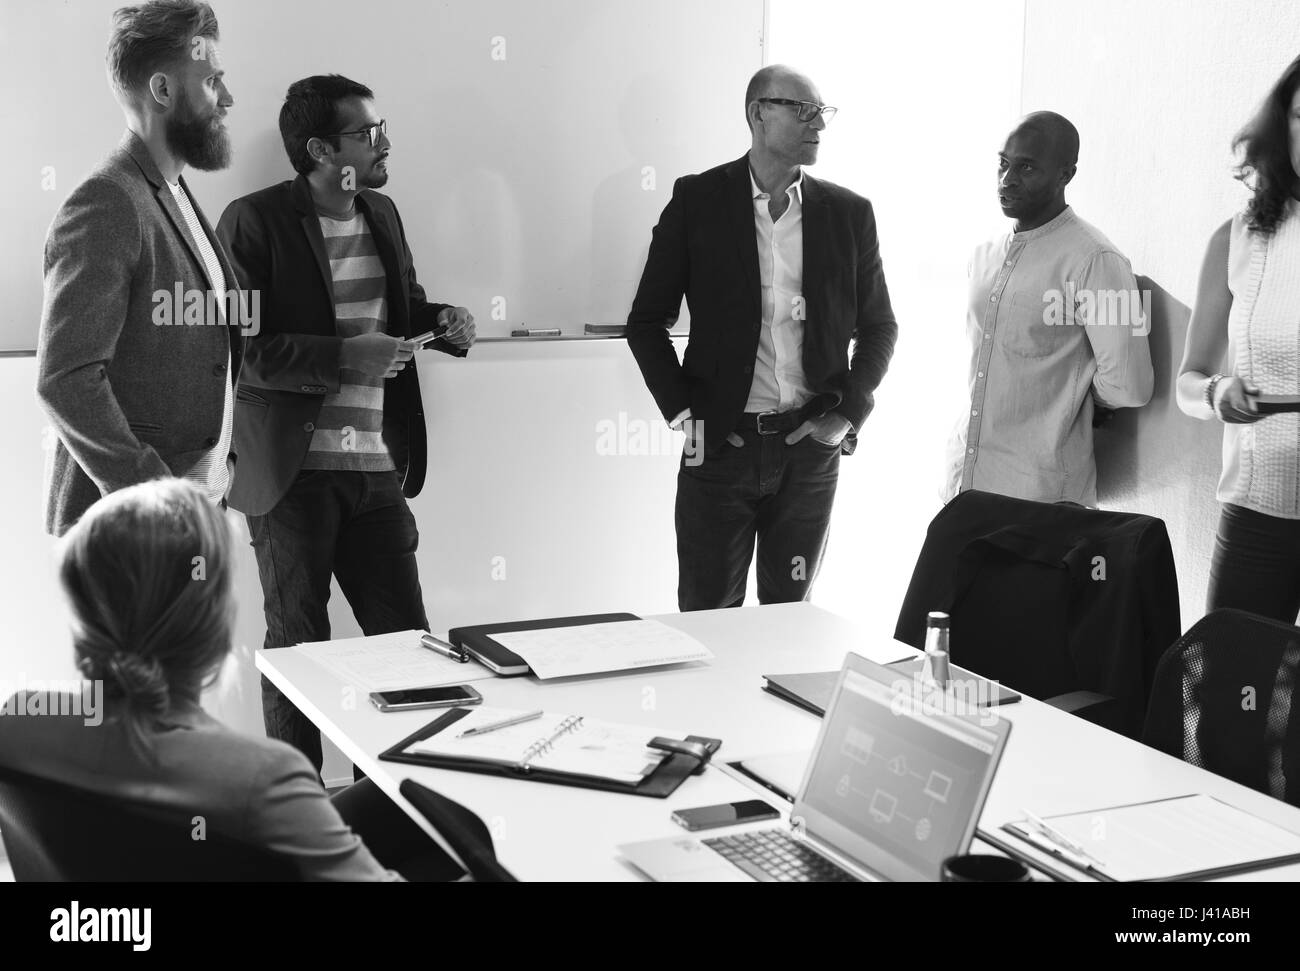 Startup Business Team brainstorming sui Workshop di riunione Foto Stock